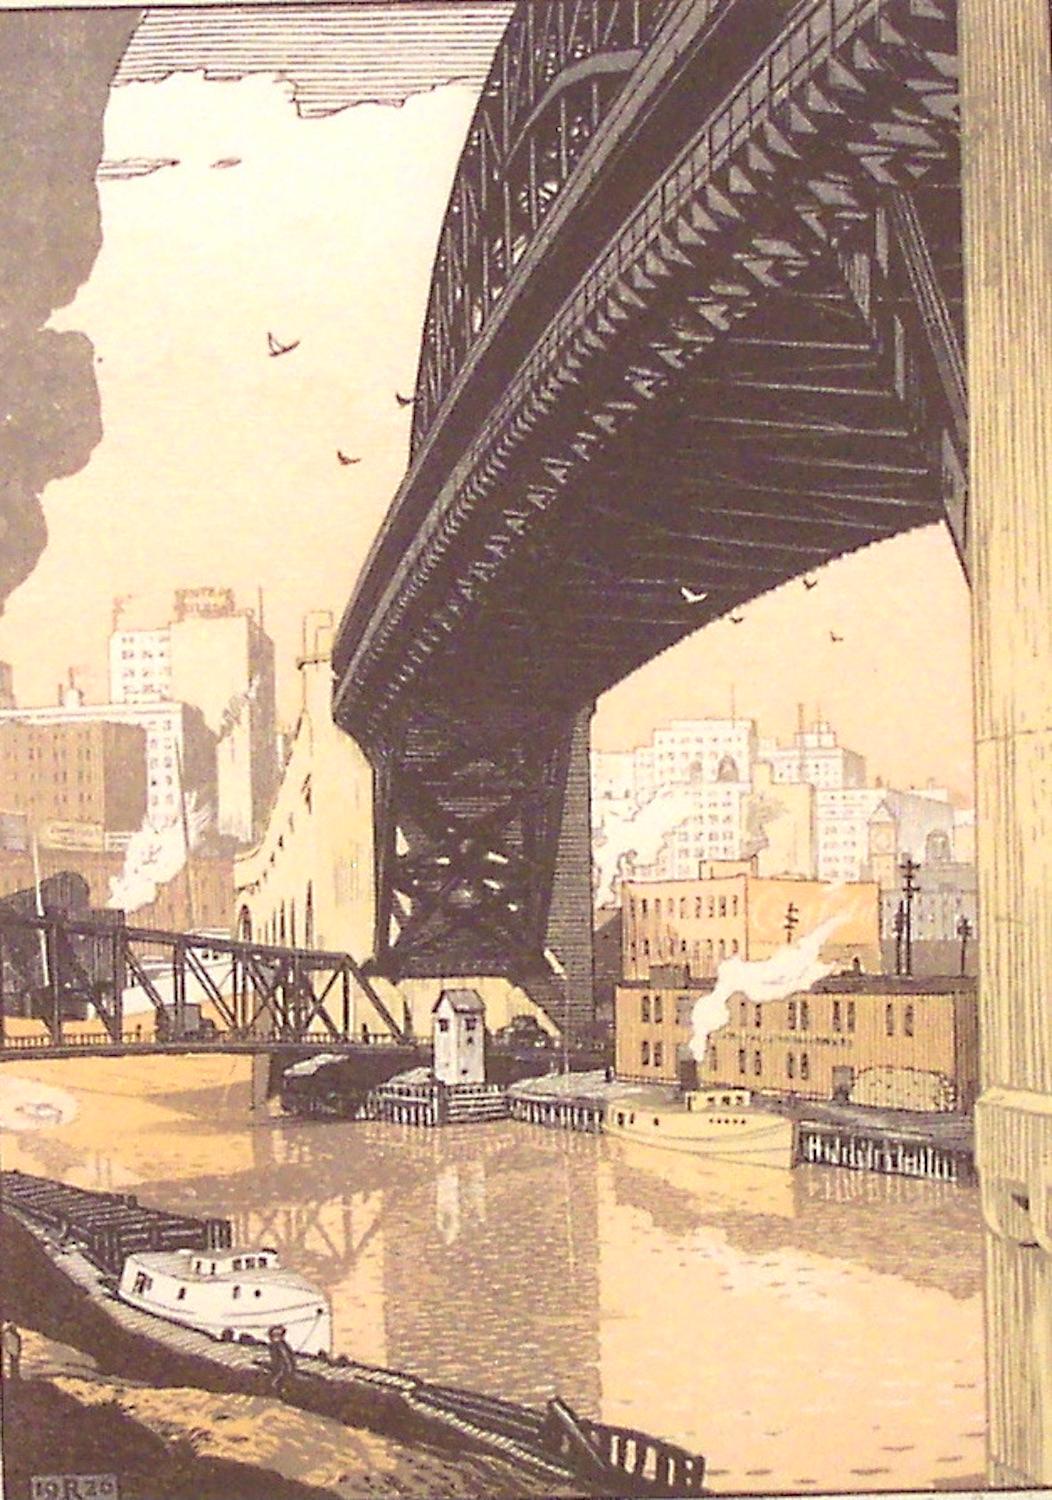 The High Level Bridge, Cleveland - American Modern Print by Rudolph Ruzicka